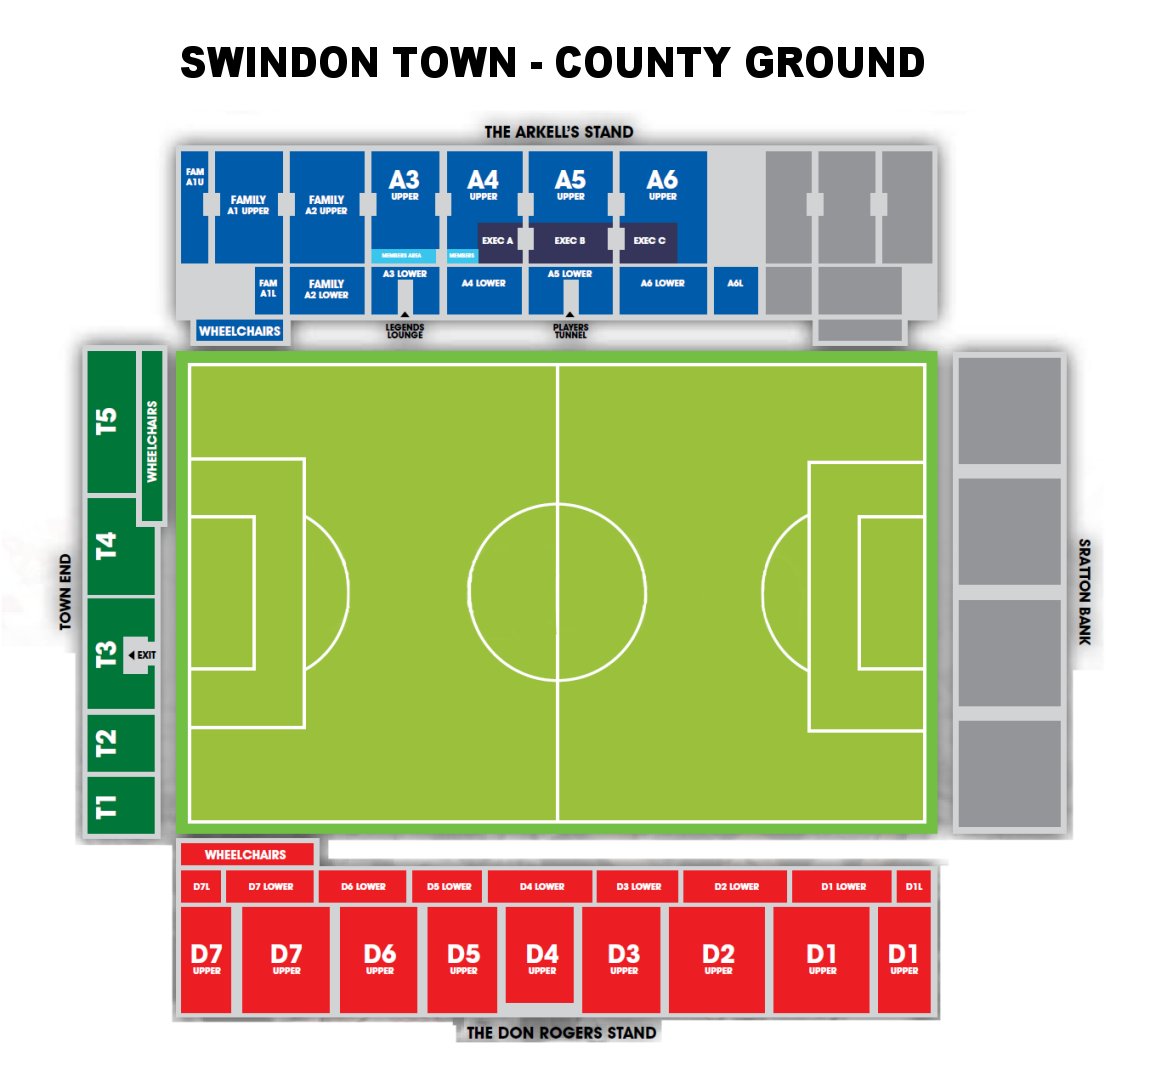 Swindon Town F.C. (Football Club) of the Barclay's Premier League